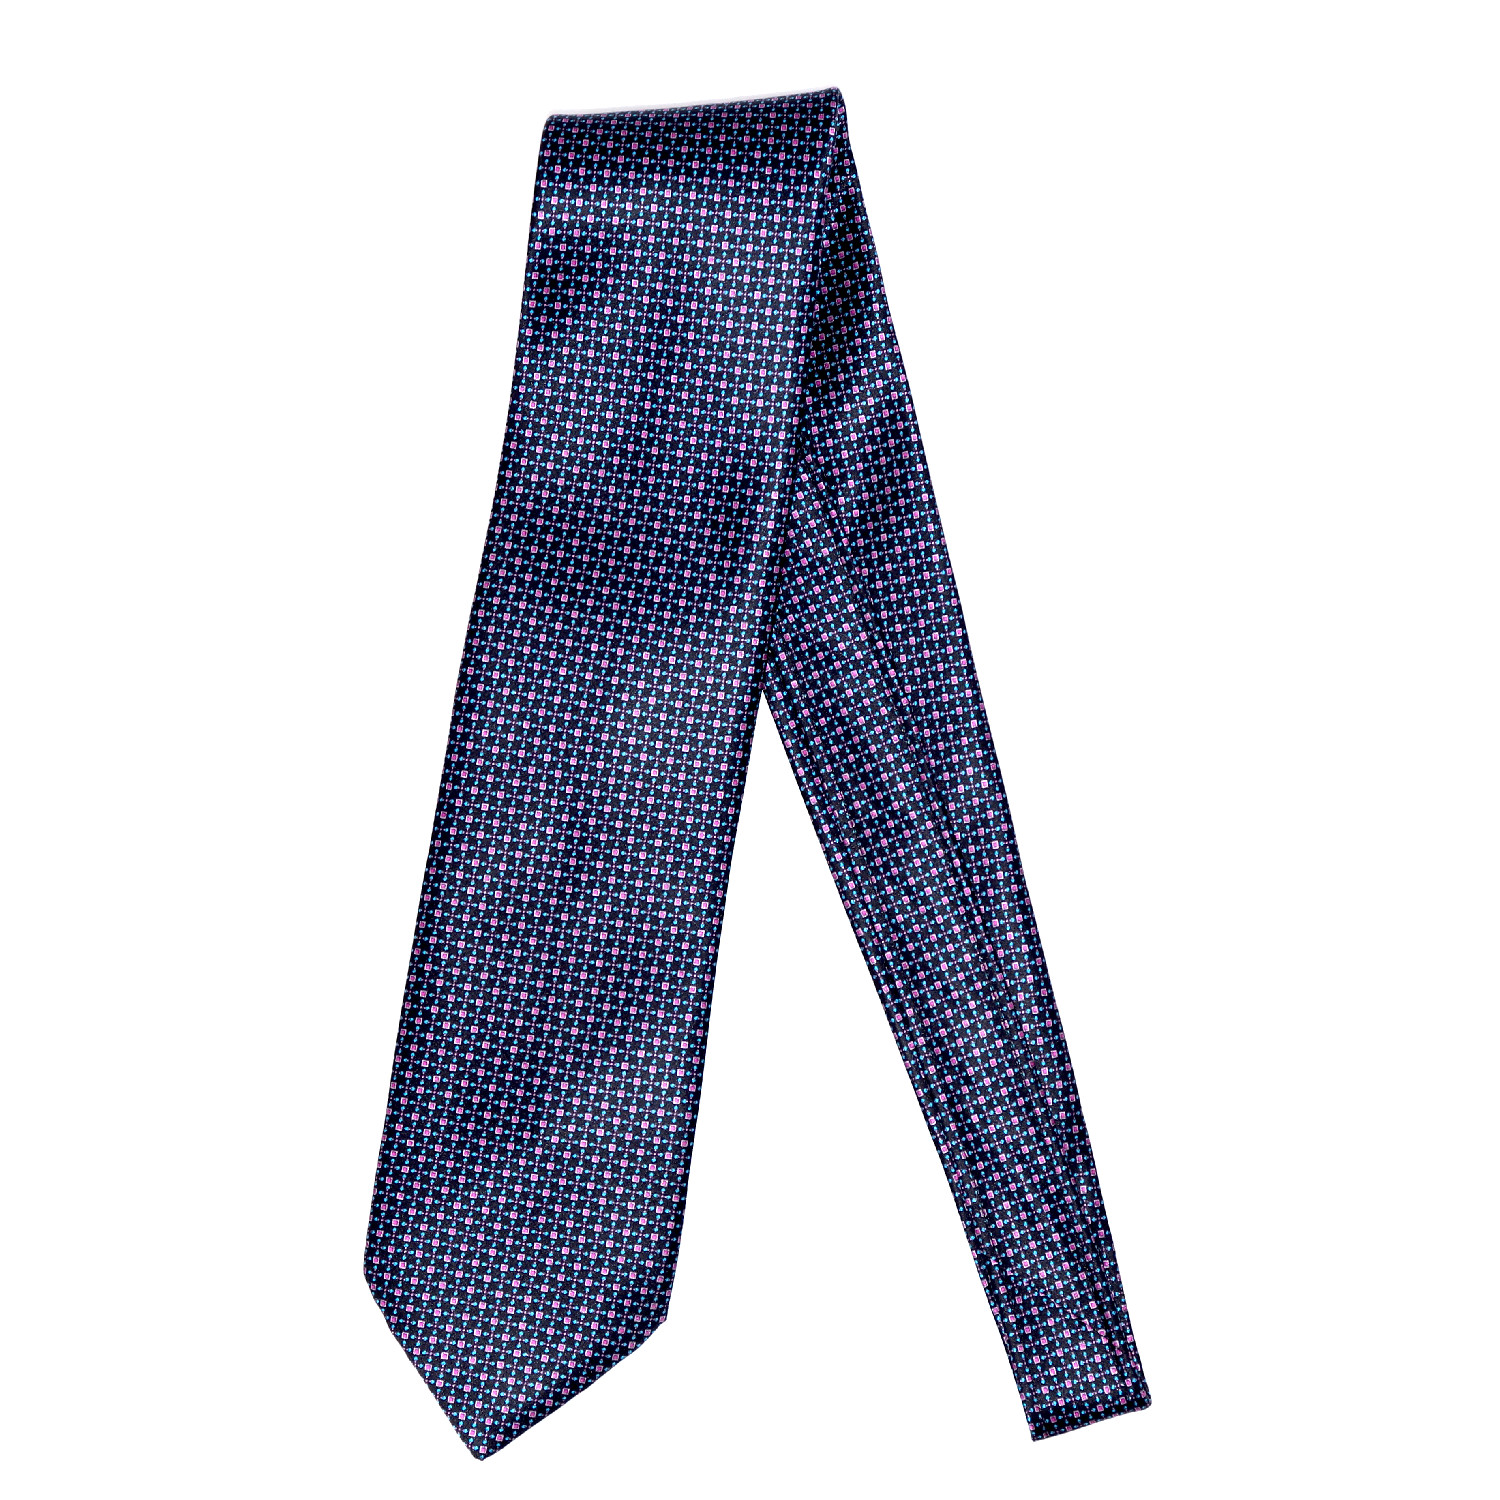 Formal elegance custom tie, refined micropattern on black background ...